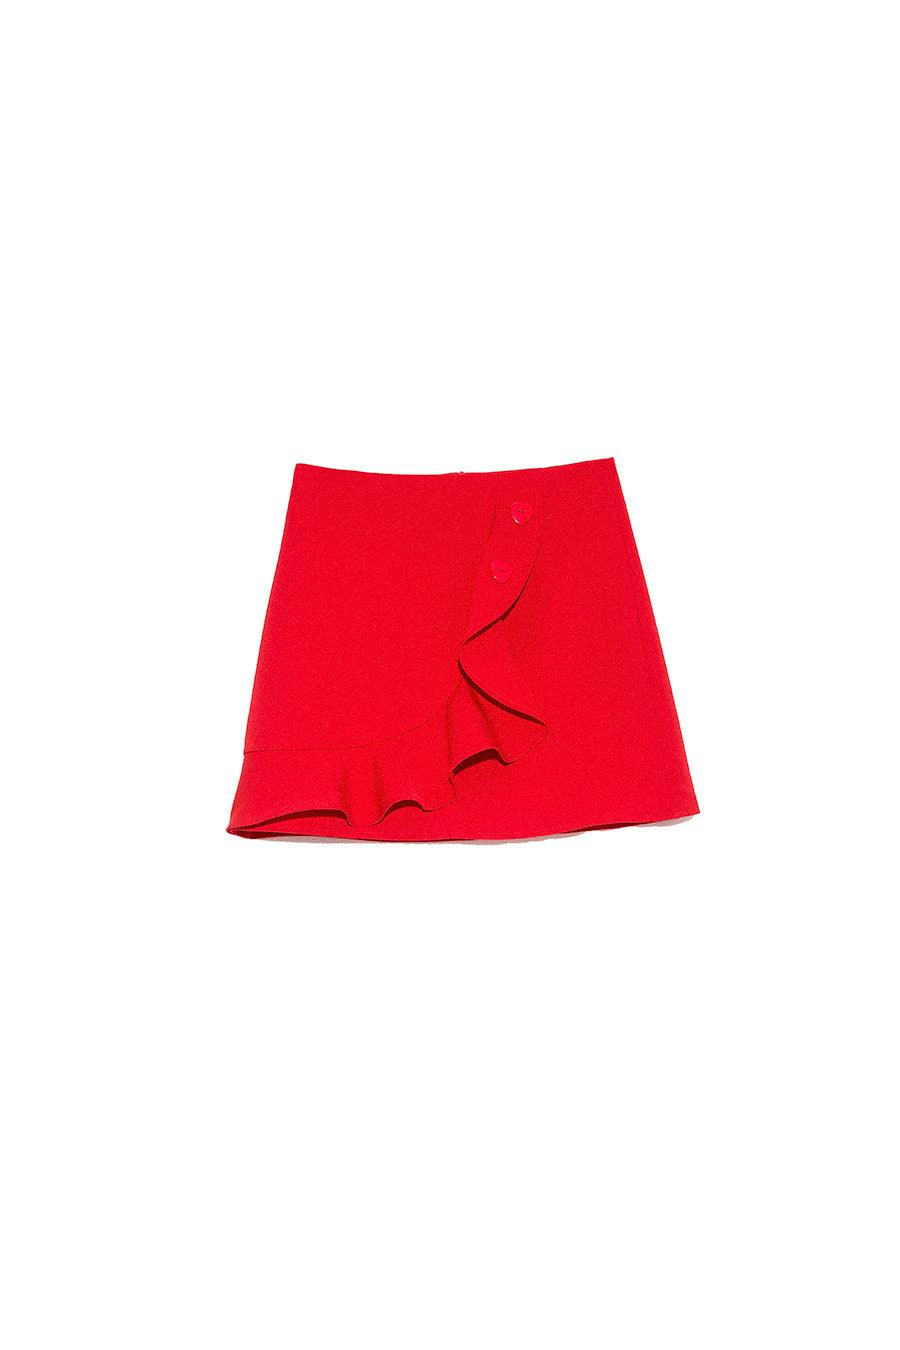 Minifalda Roja Corazones - ECRU